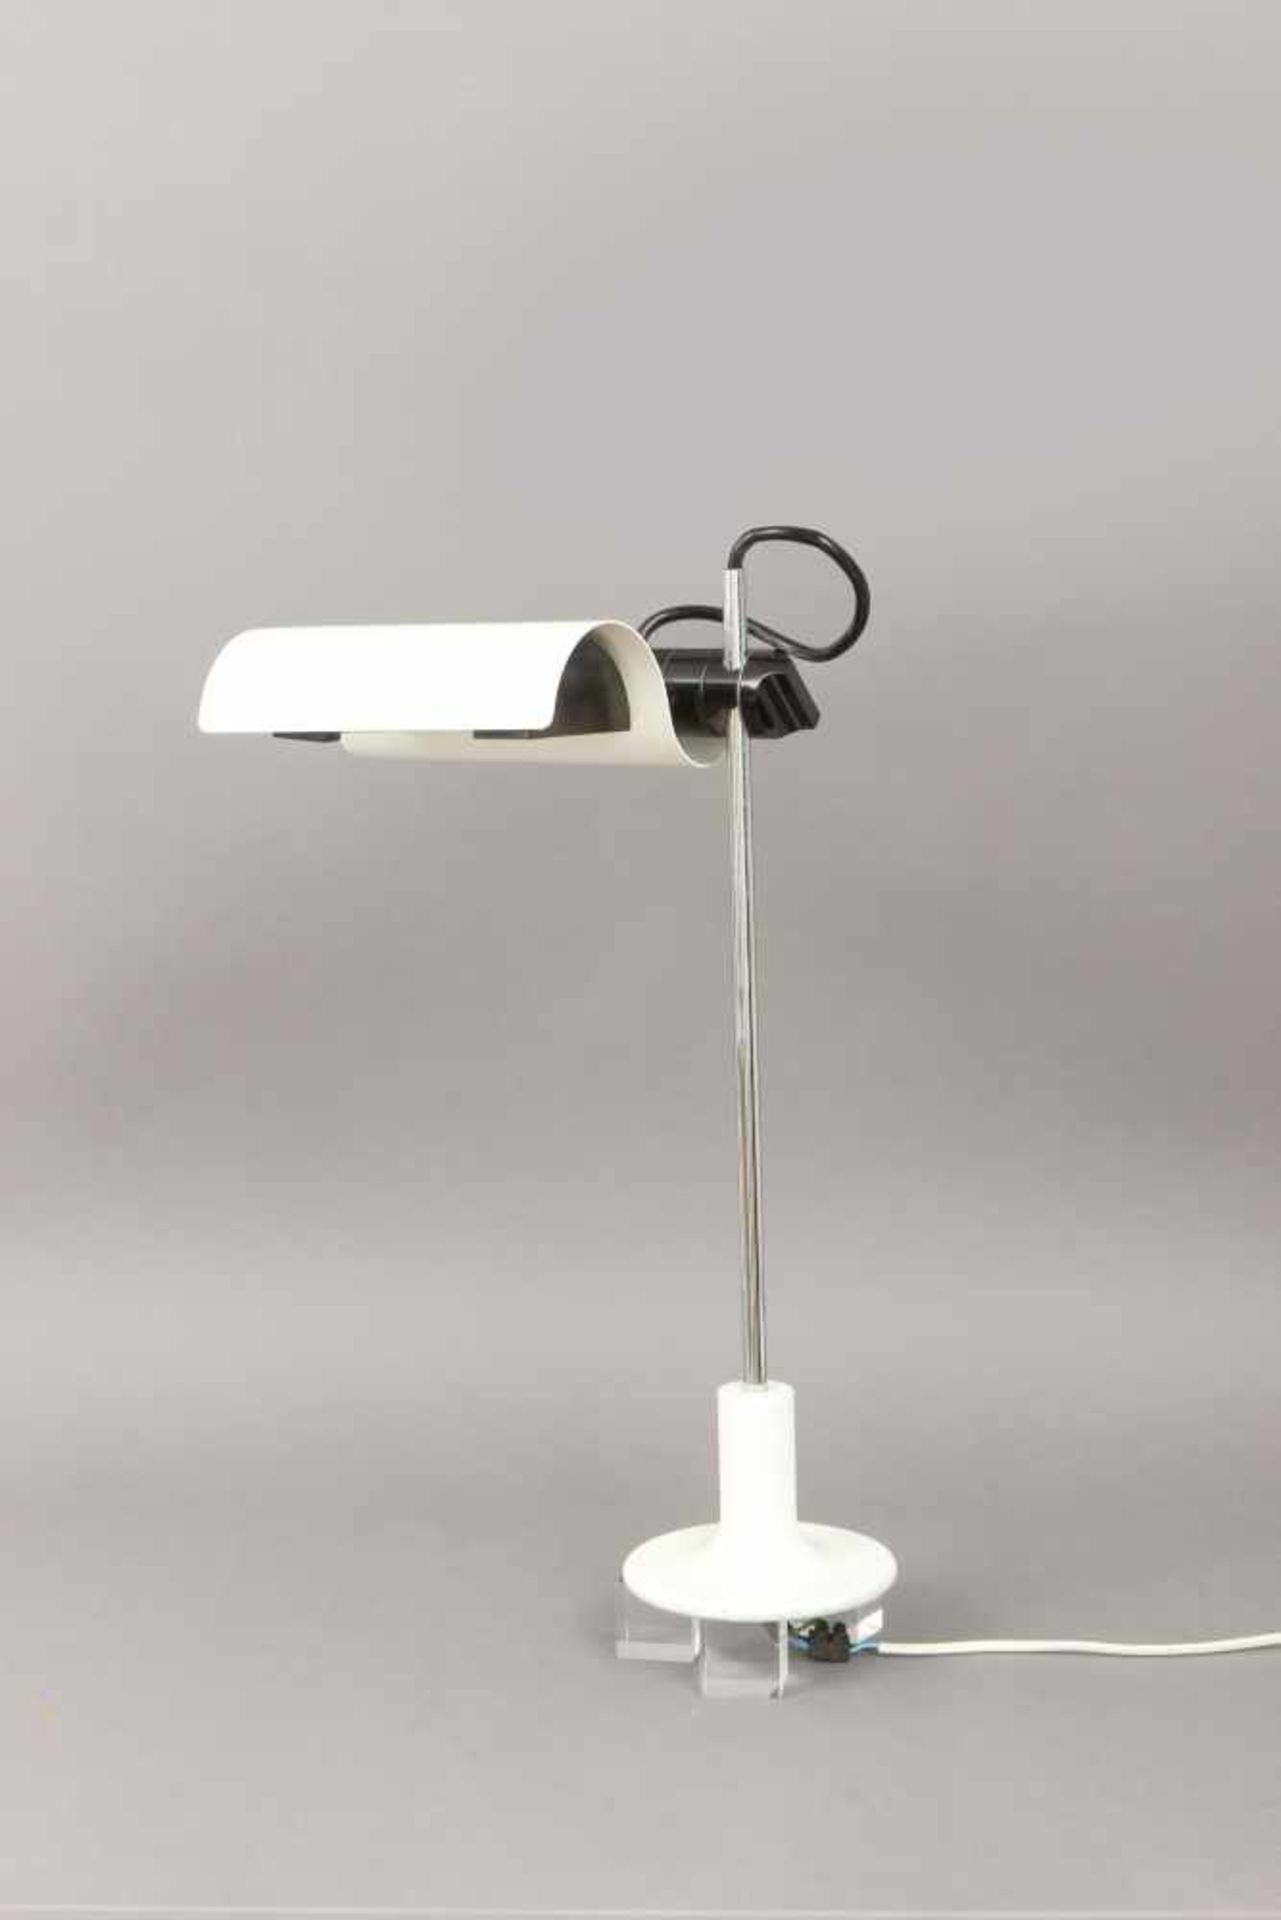 OLUCE Wand-/Deckenlampe, Modell DIM 333Entwurf Vico Magistretti a.d. Jahr 1975, weiß lackierter